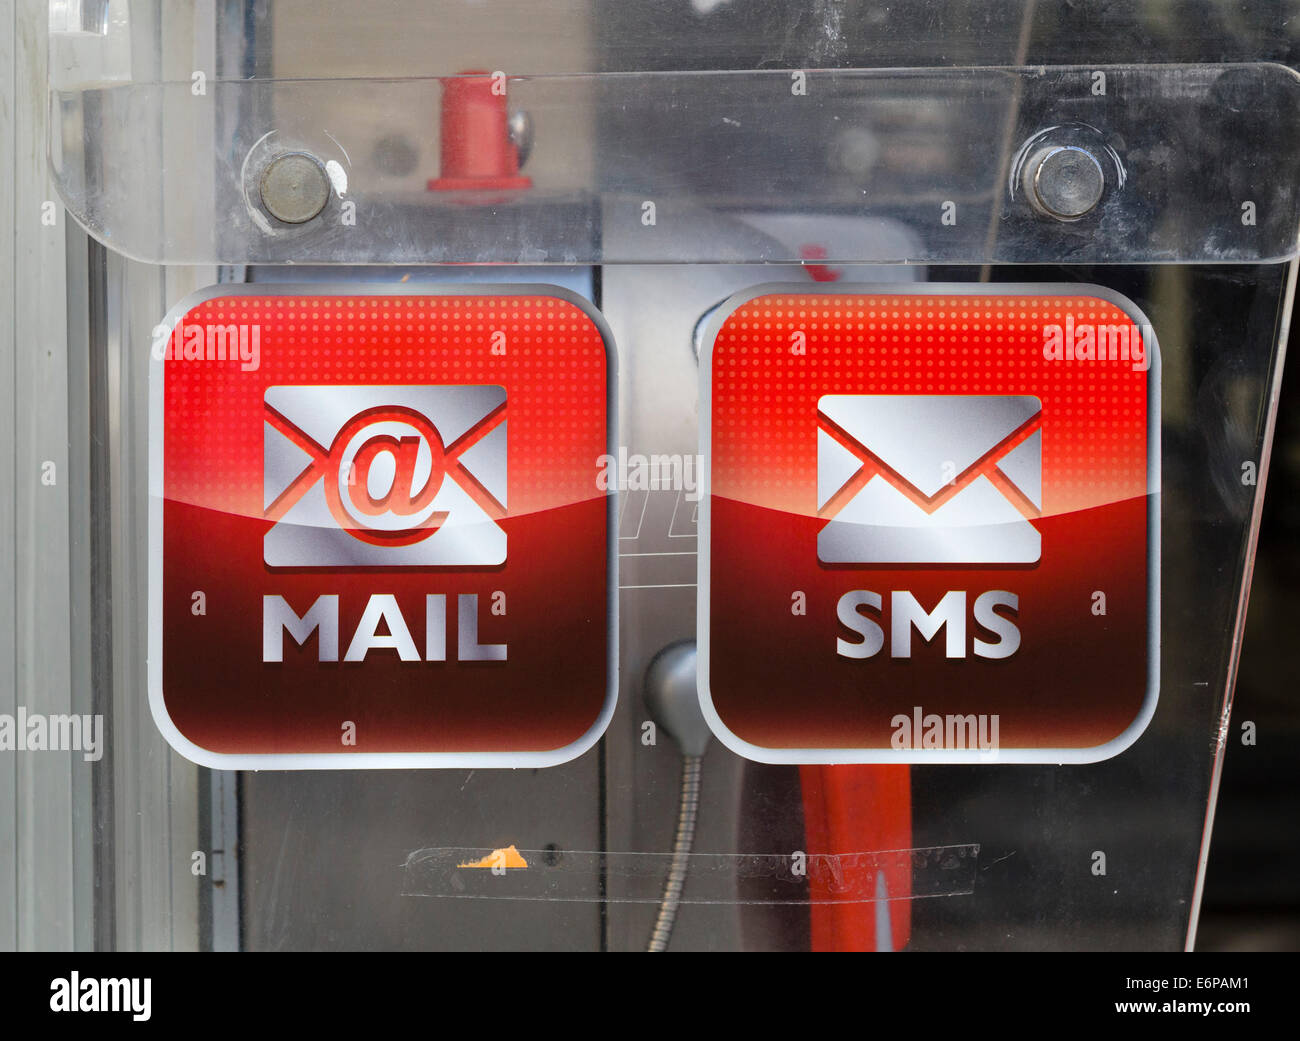 Phone box with email and sms services, Reggio Emila (Reggio nell'Emilia), Emilia Romagna, Italy Stock Photo